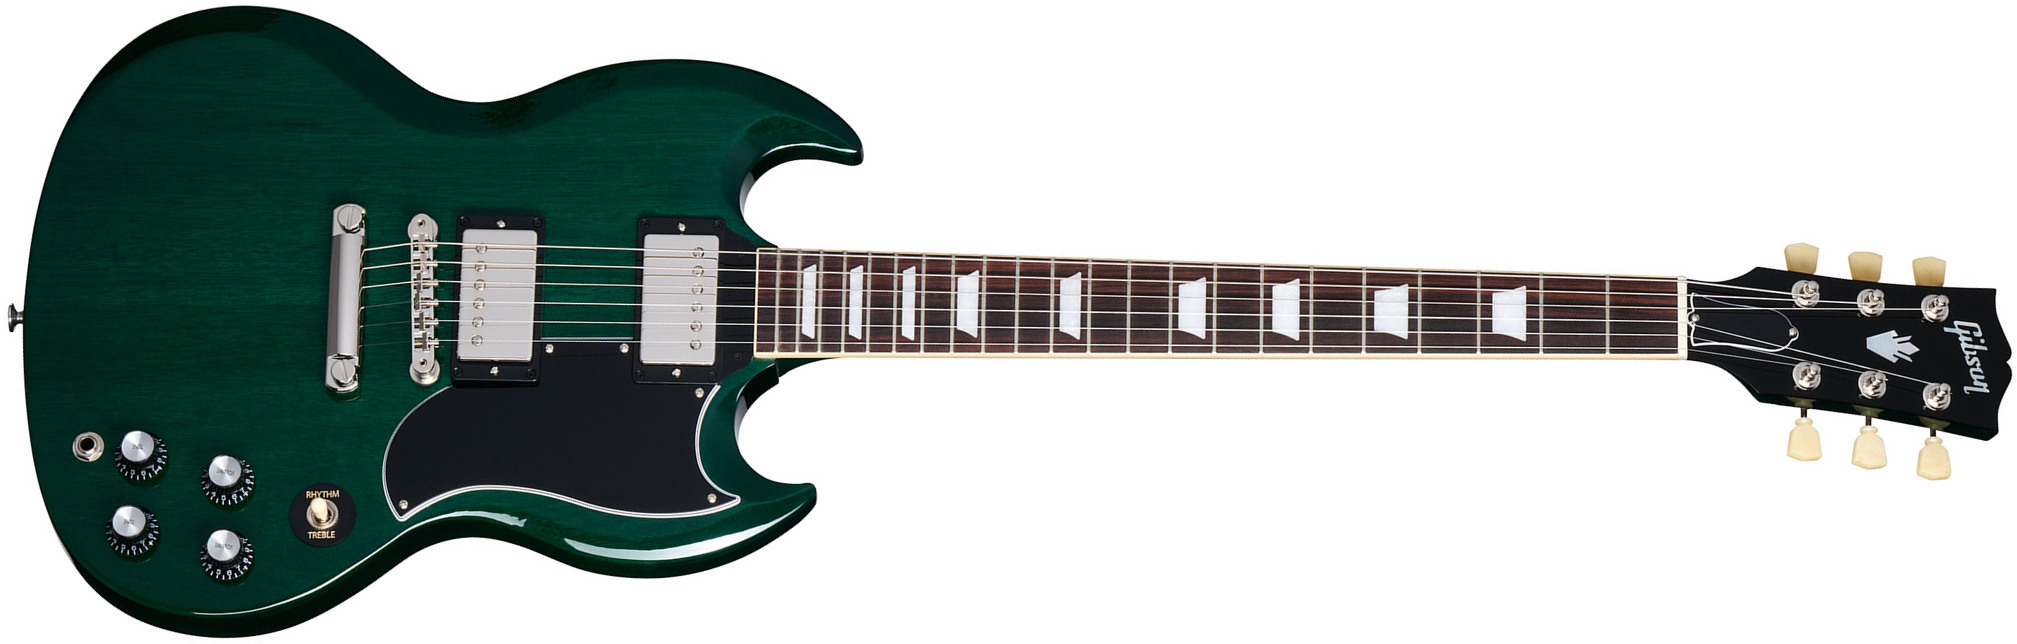 Gibson Sg Standard 1961 Custom Color 2h Ht Rw - Translucent Teal - Guitarra eléctrica de doble corte. - Main picture